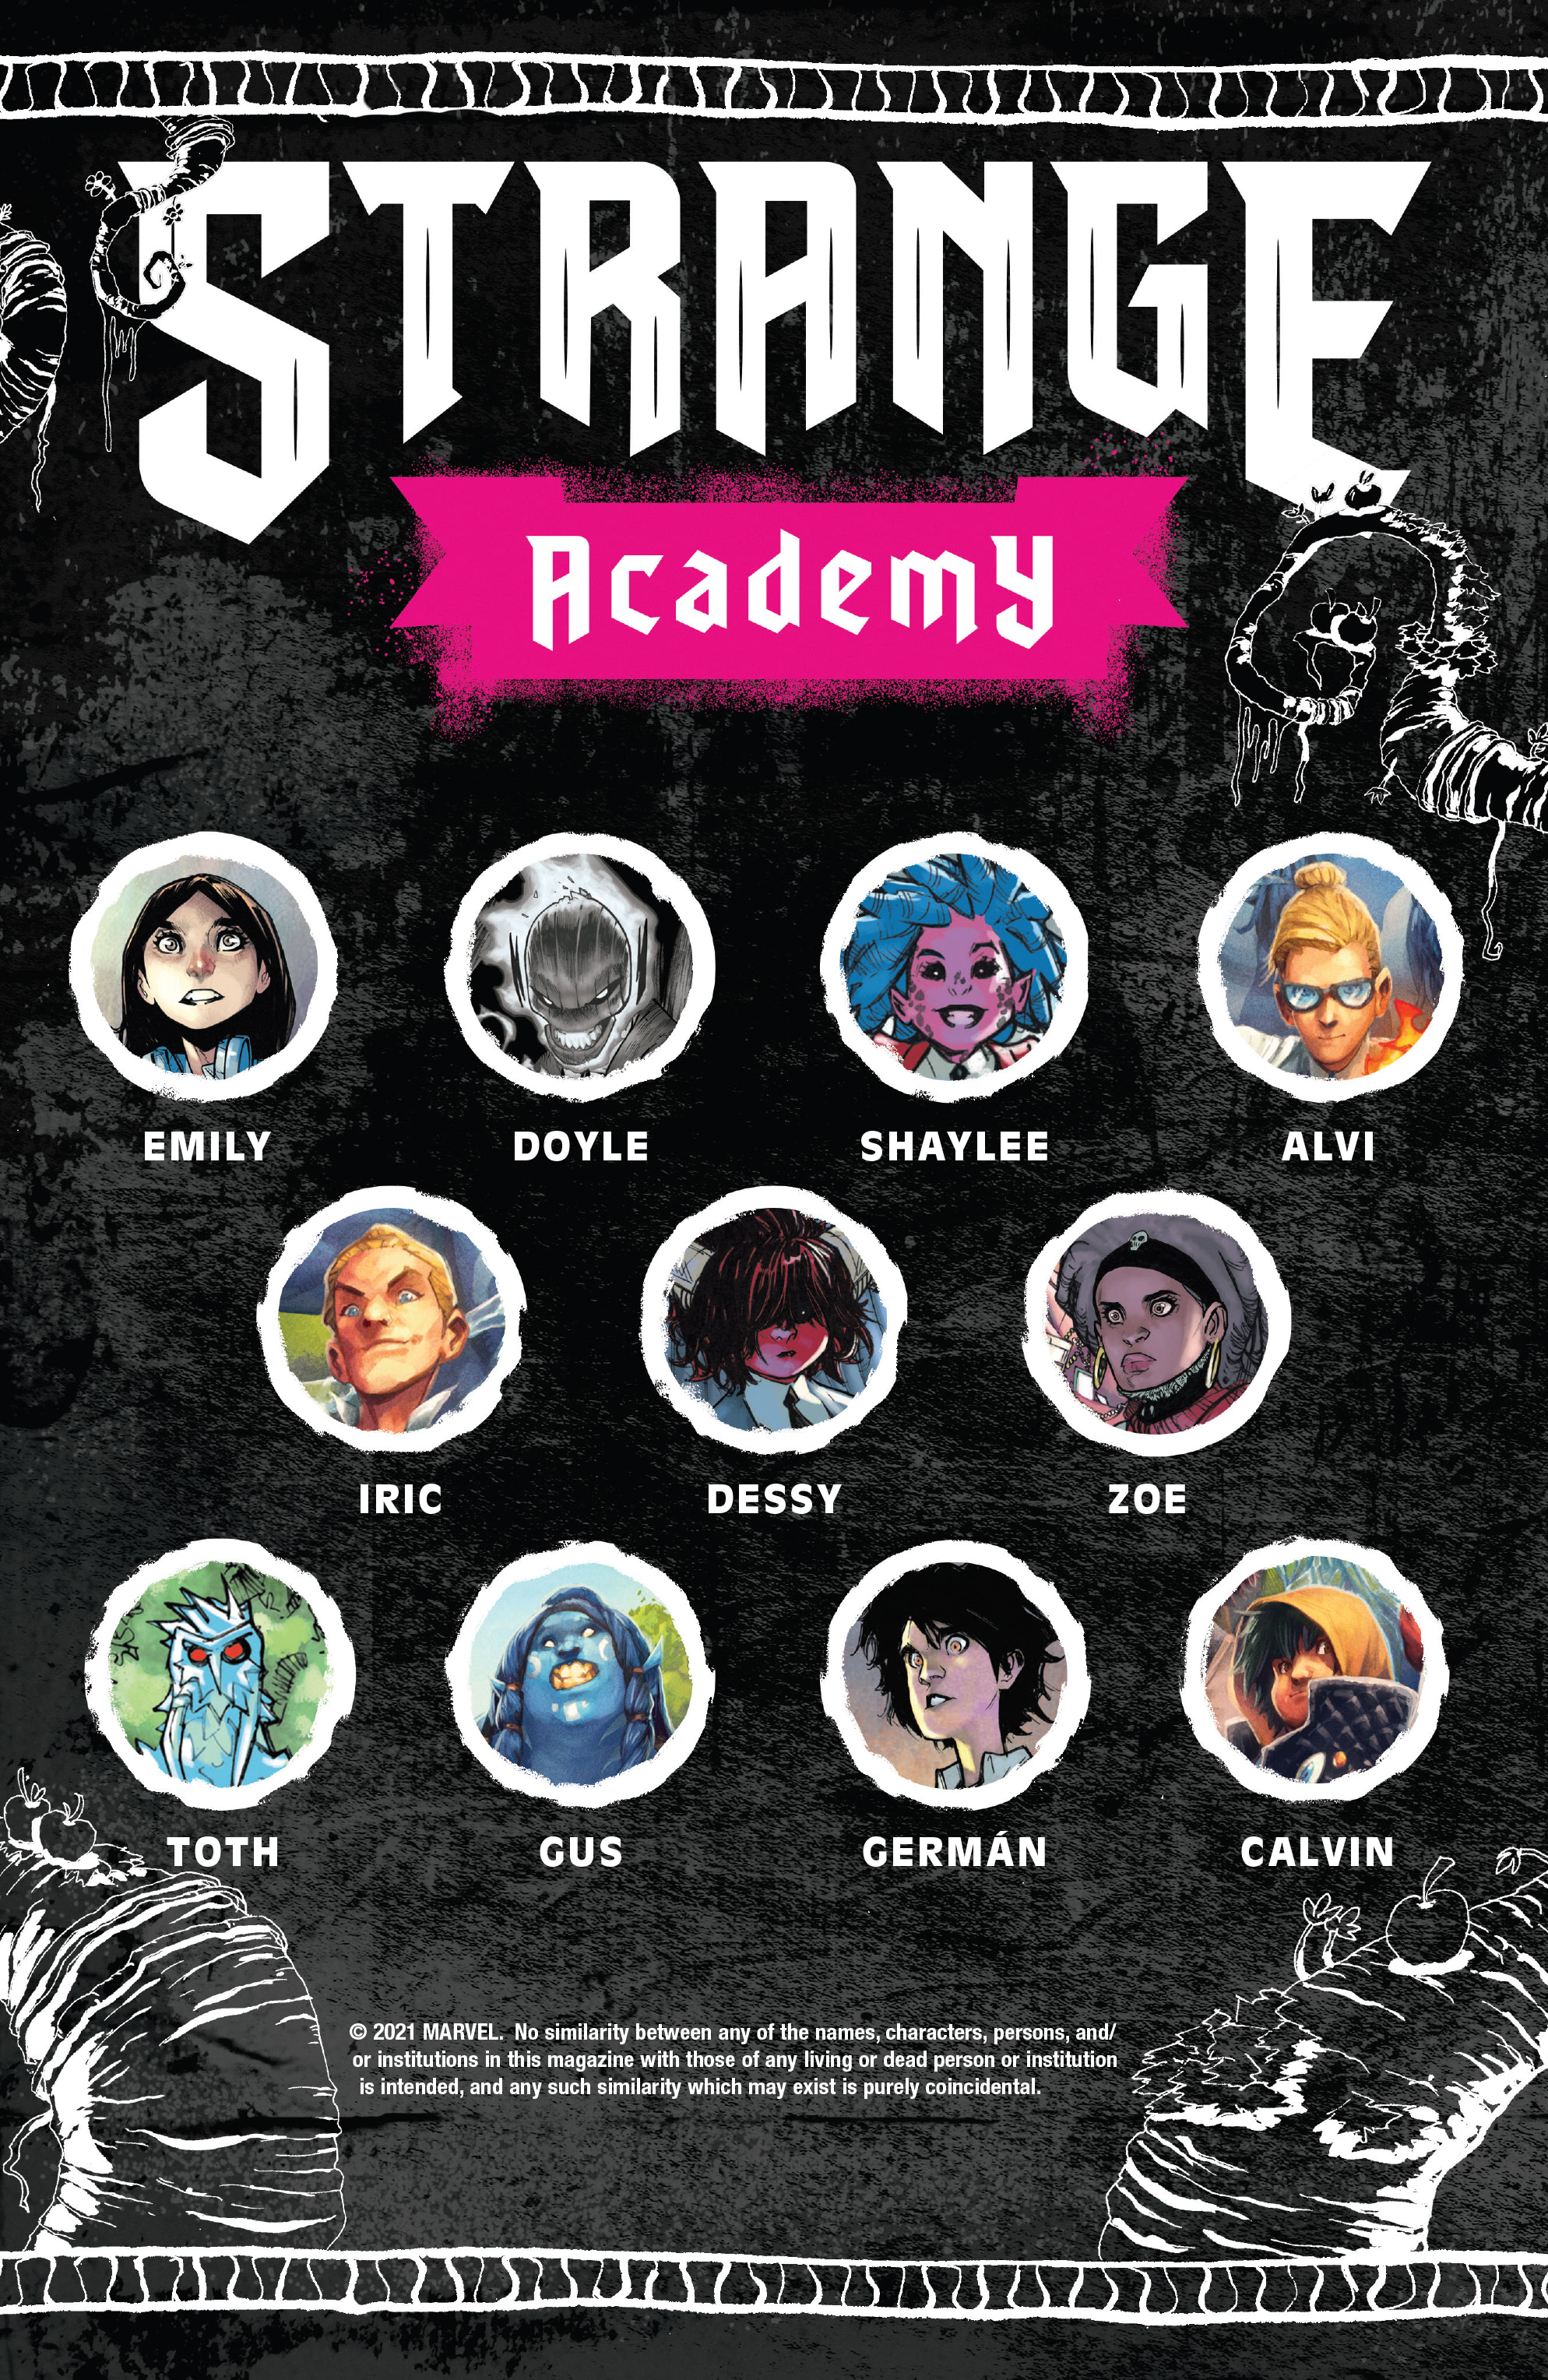 Read online Strange Academy comic -  Issue #7 - 3